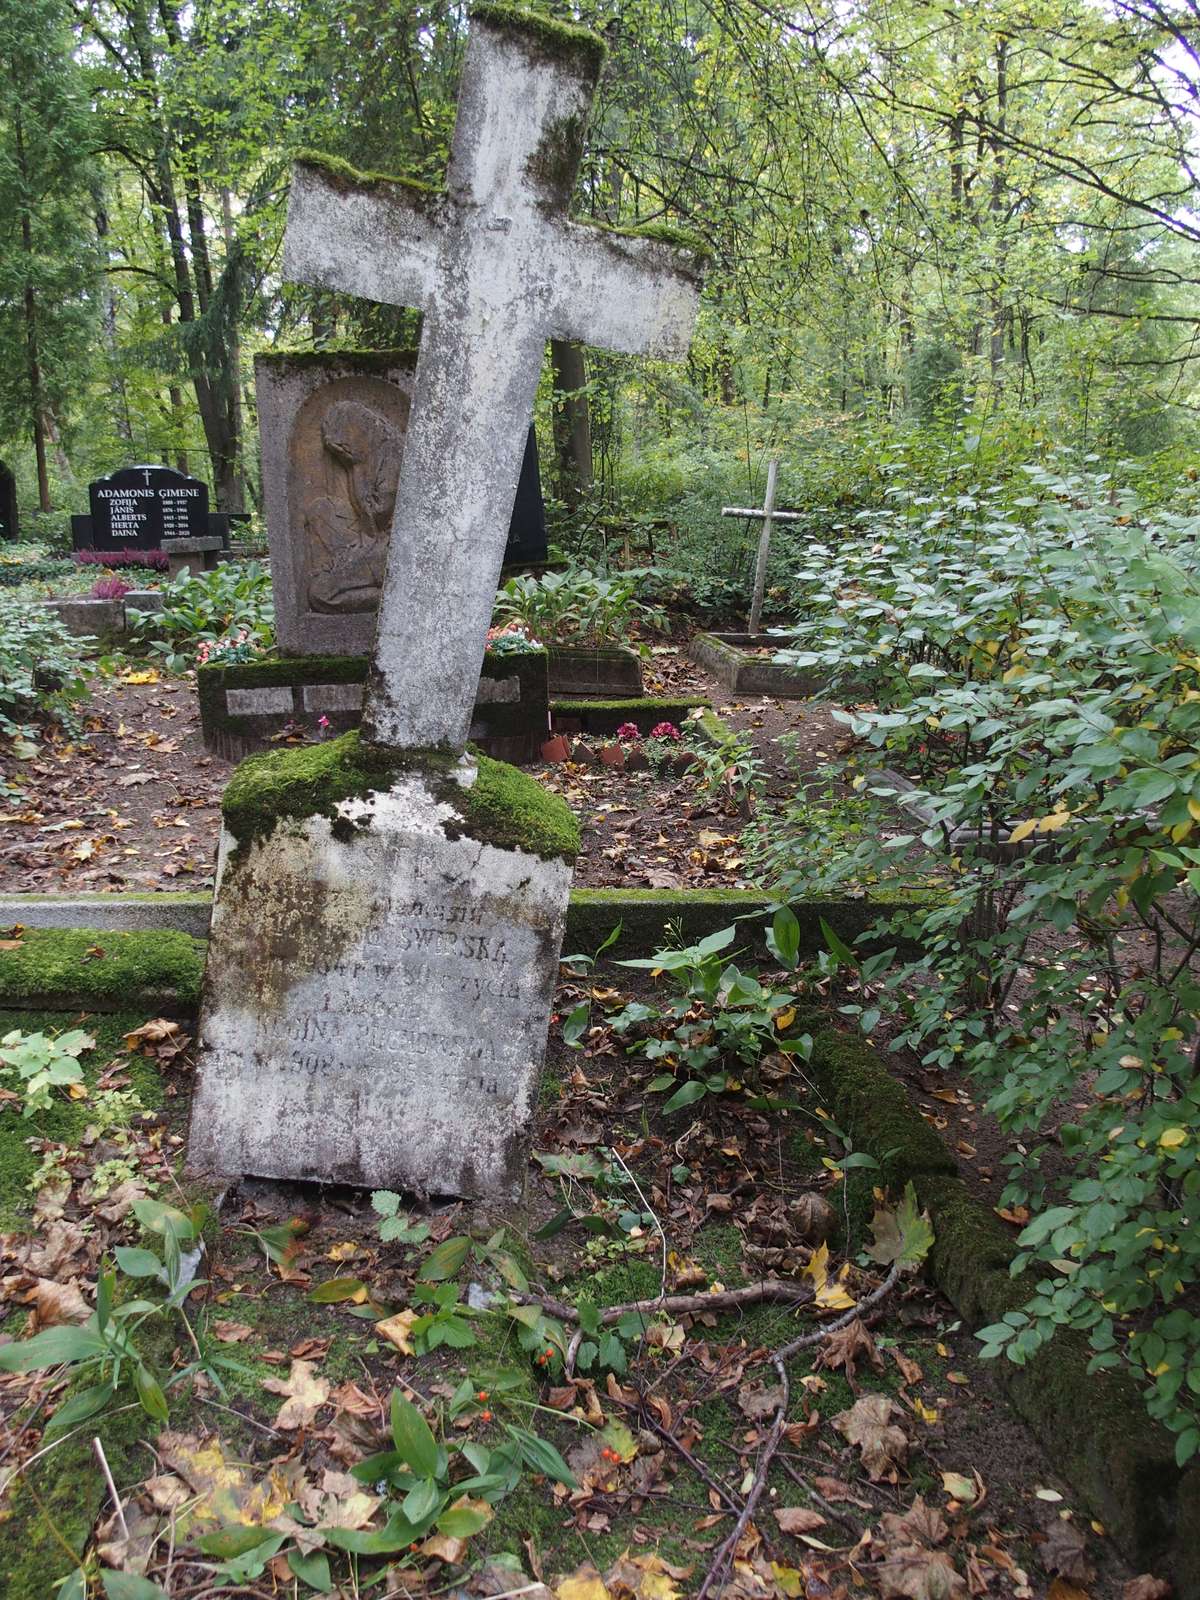 Tombstone of Regina Puchowska and Paulina Swirska